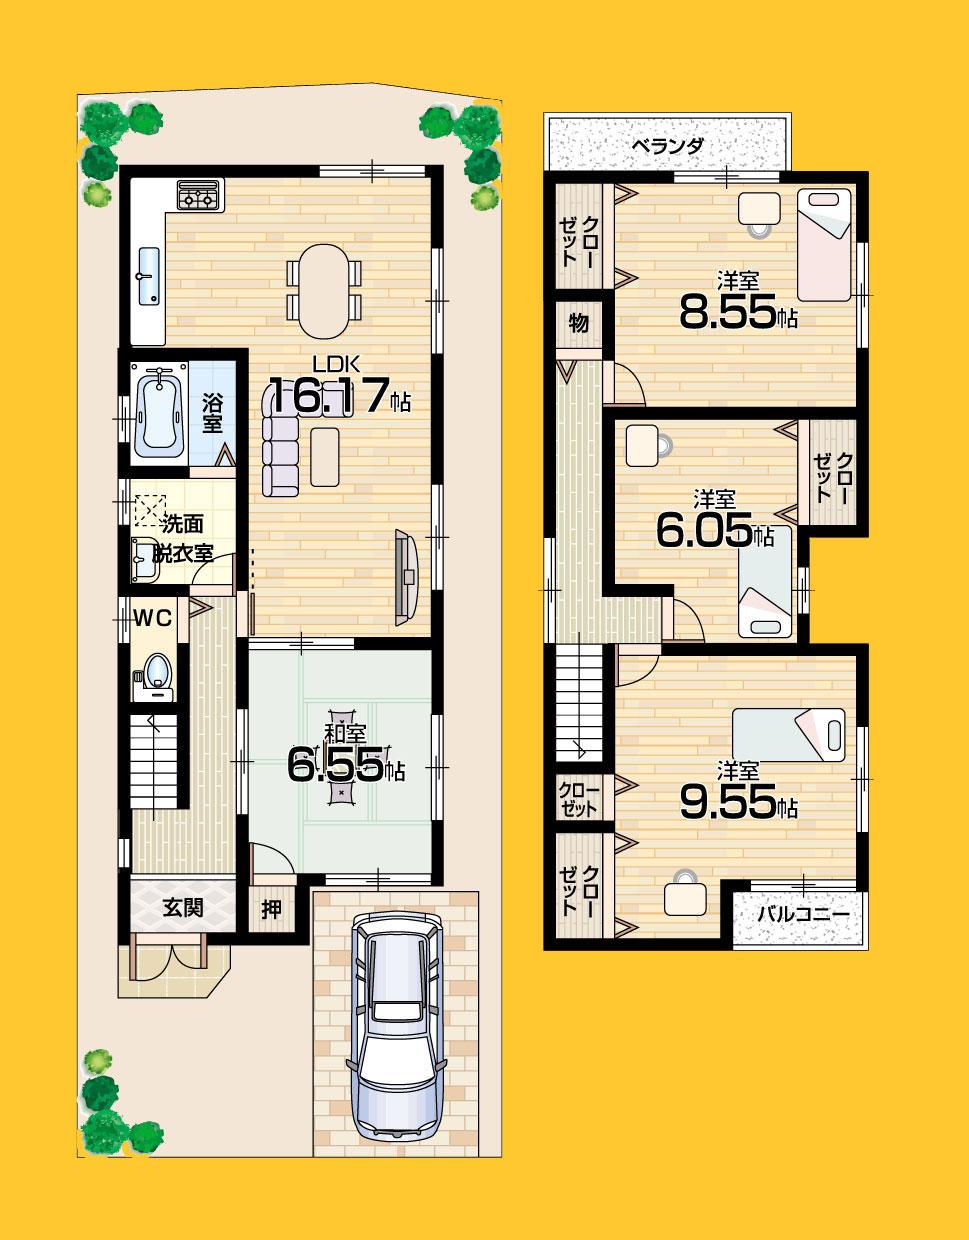 Floor plan. 23,300,000 yen, 4LDK, Land area 100.03 sq m , Building area 105.84 sq m land 30 square meters 4LDK Breadth of each room room